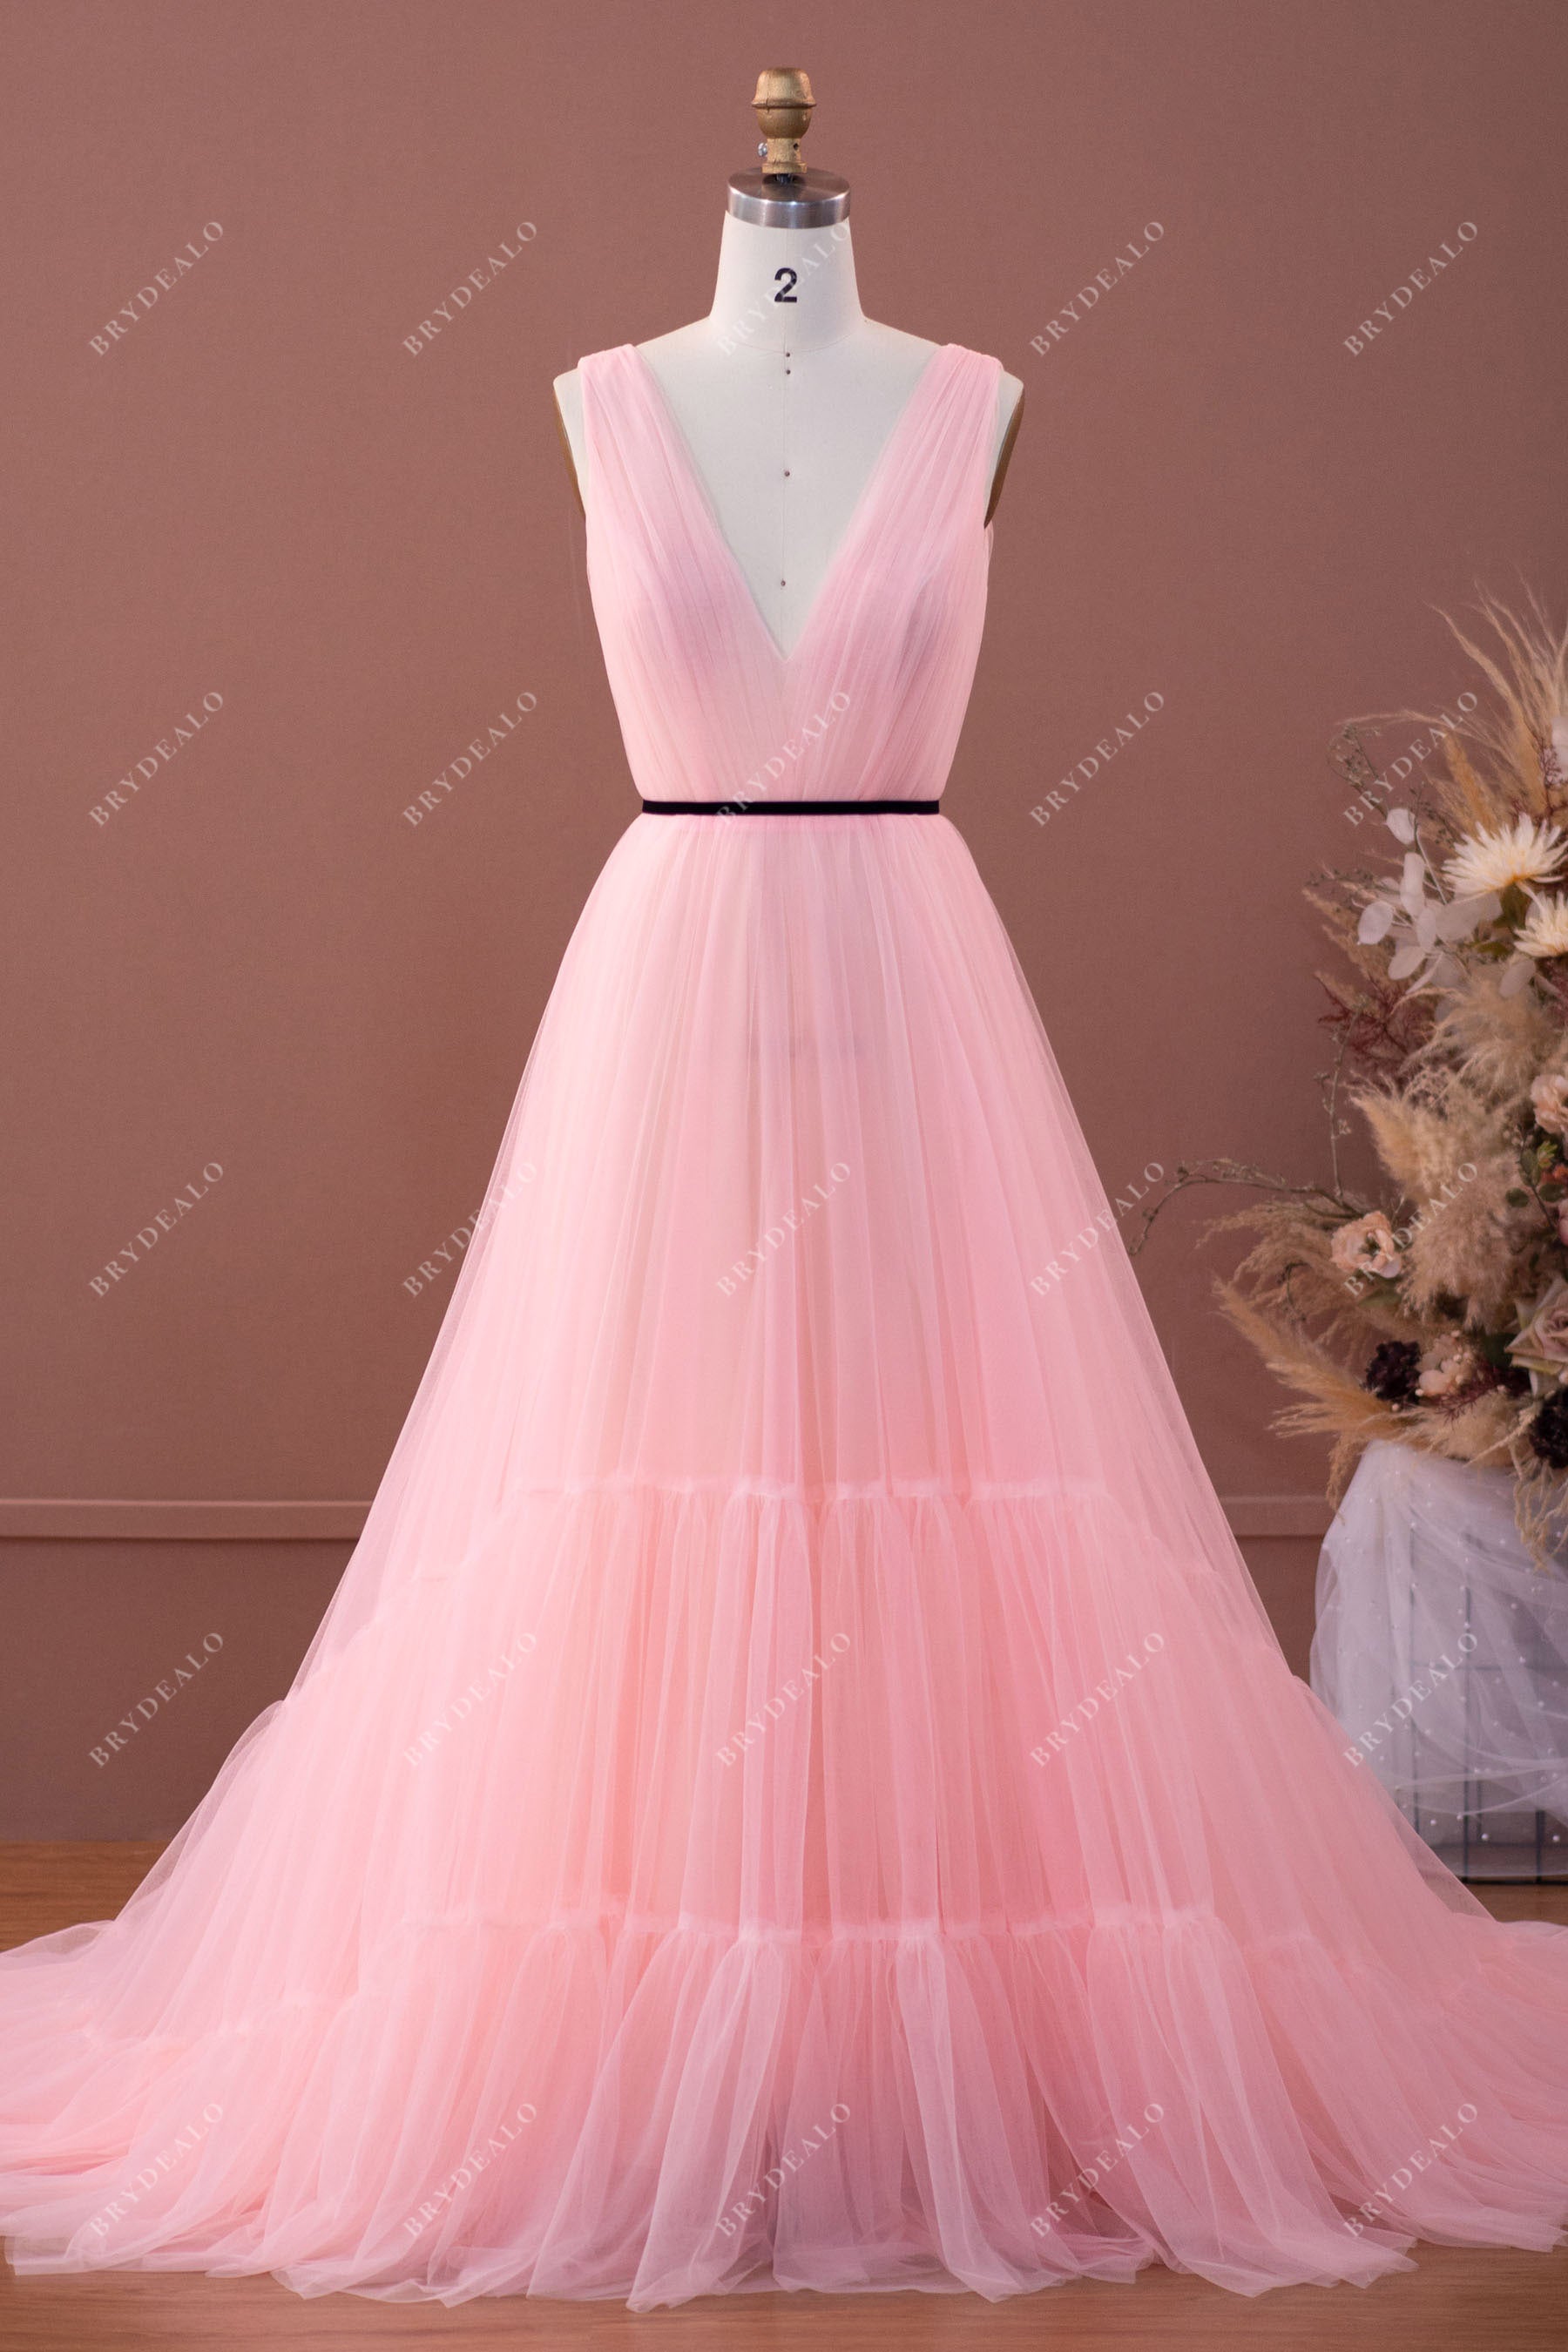 Light Pink Sleeveless Illusion Neckline Prom Dress With Lace Bodice